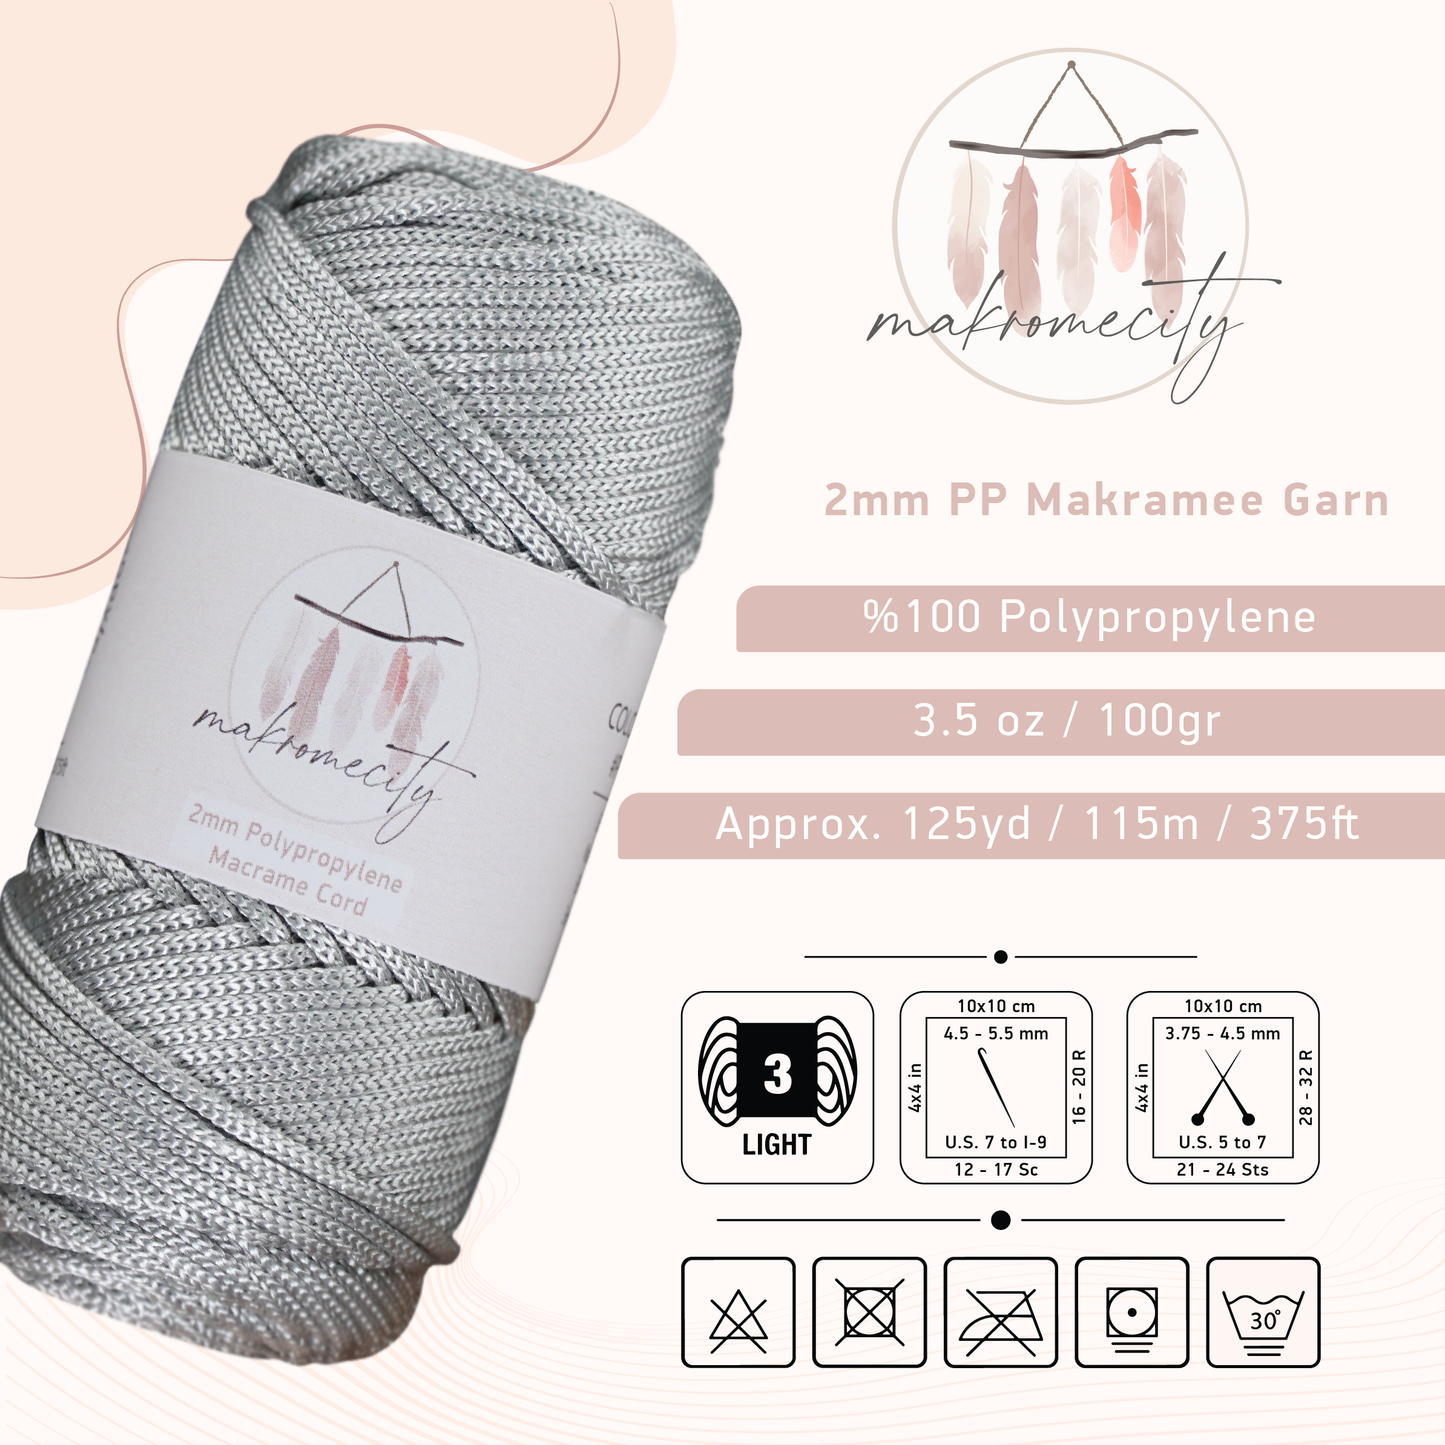 Makramee Garn 2mm x 115m Premium Polyester Macrame Cord - Light Grau